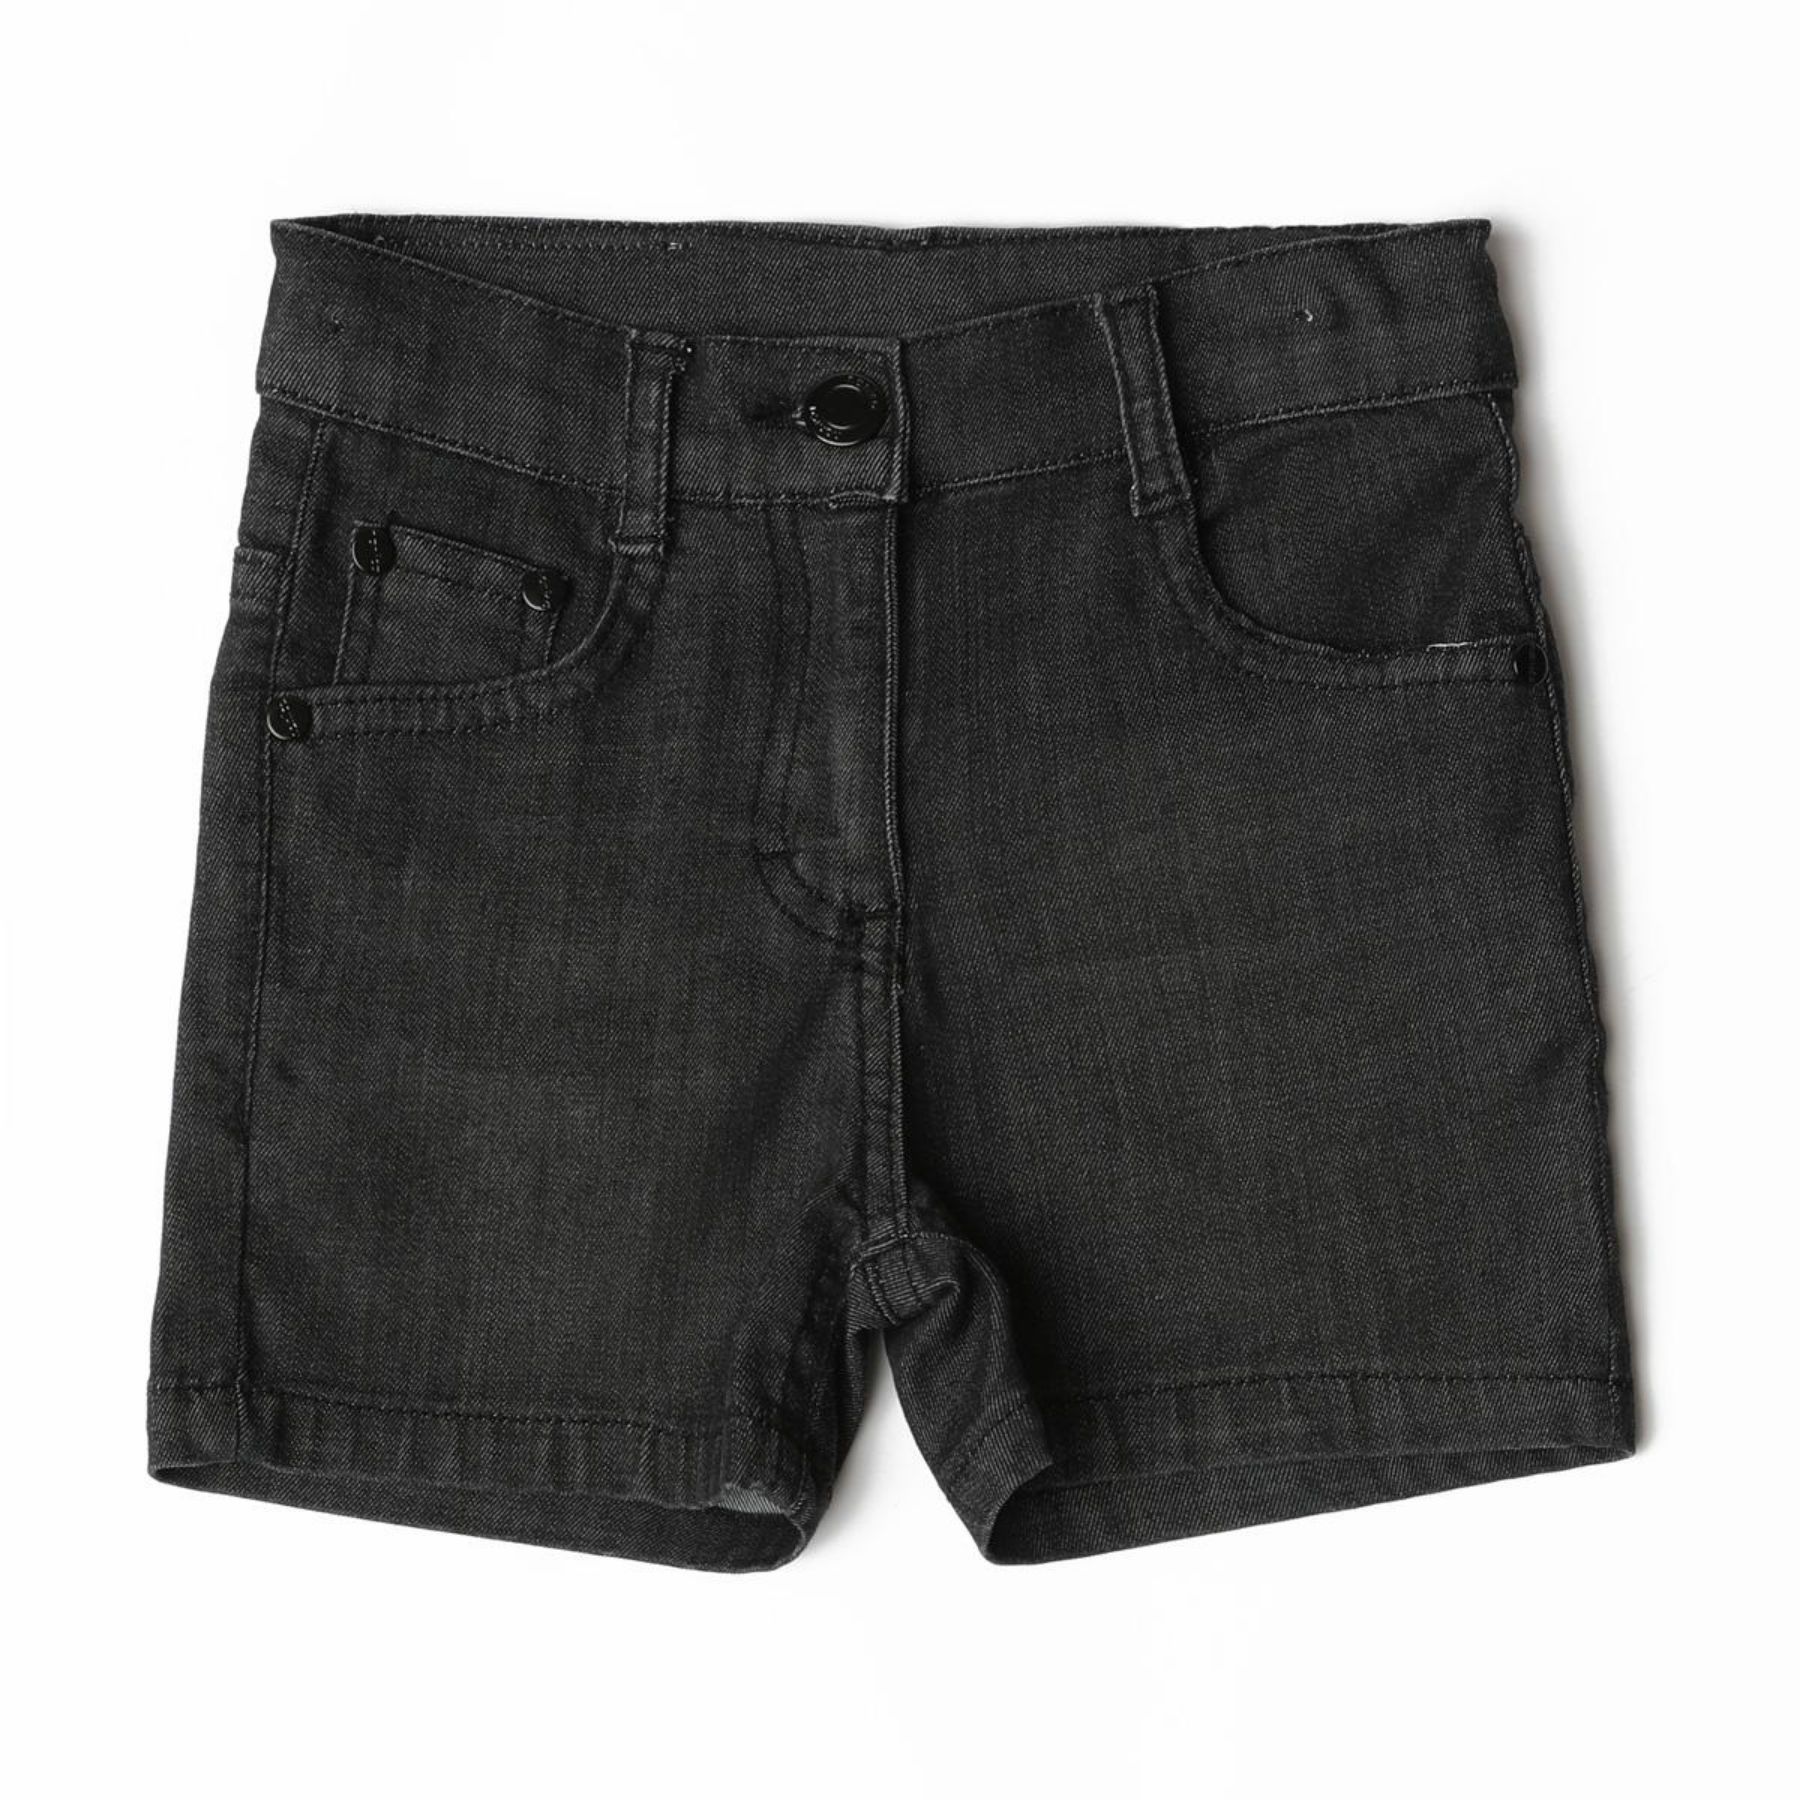 Nanica 122270 BLACK Boy Shorts | Dosso Dossi